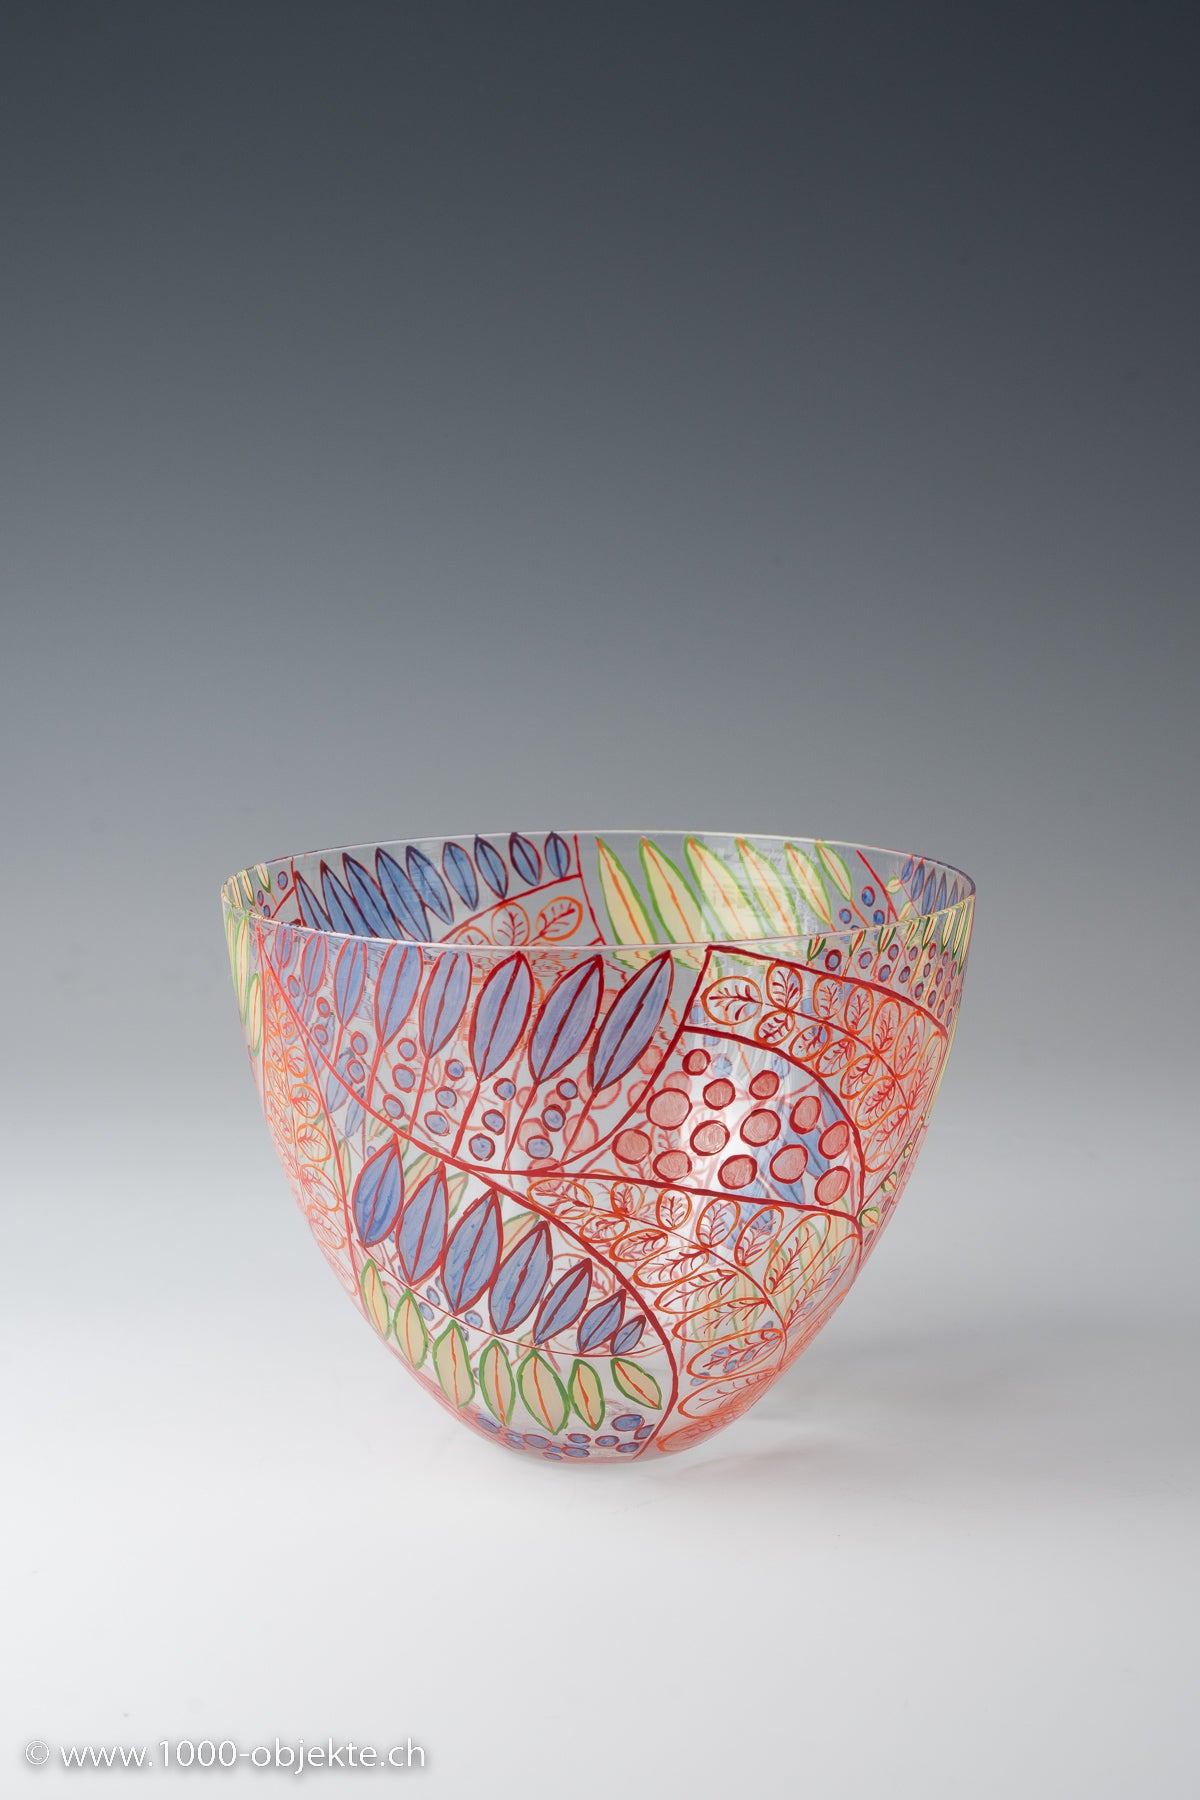 Vittorio Zecchin, enameled glass bowl, ca. 1938